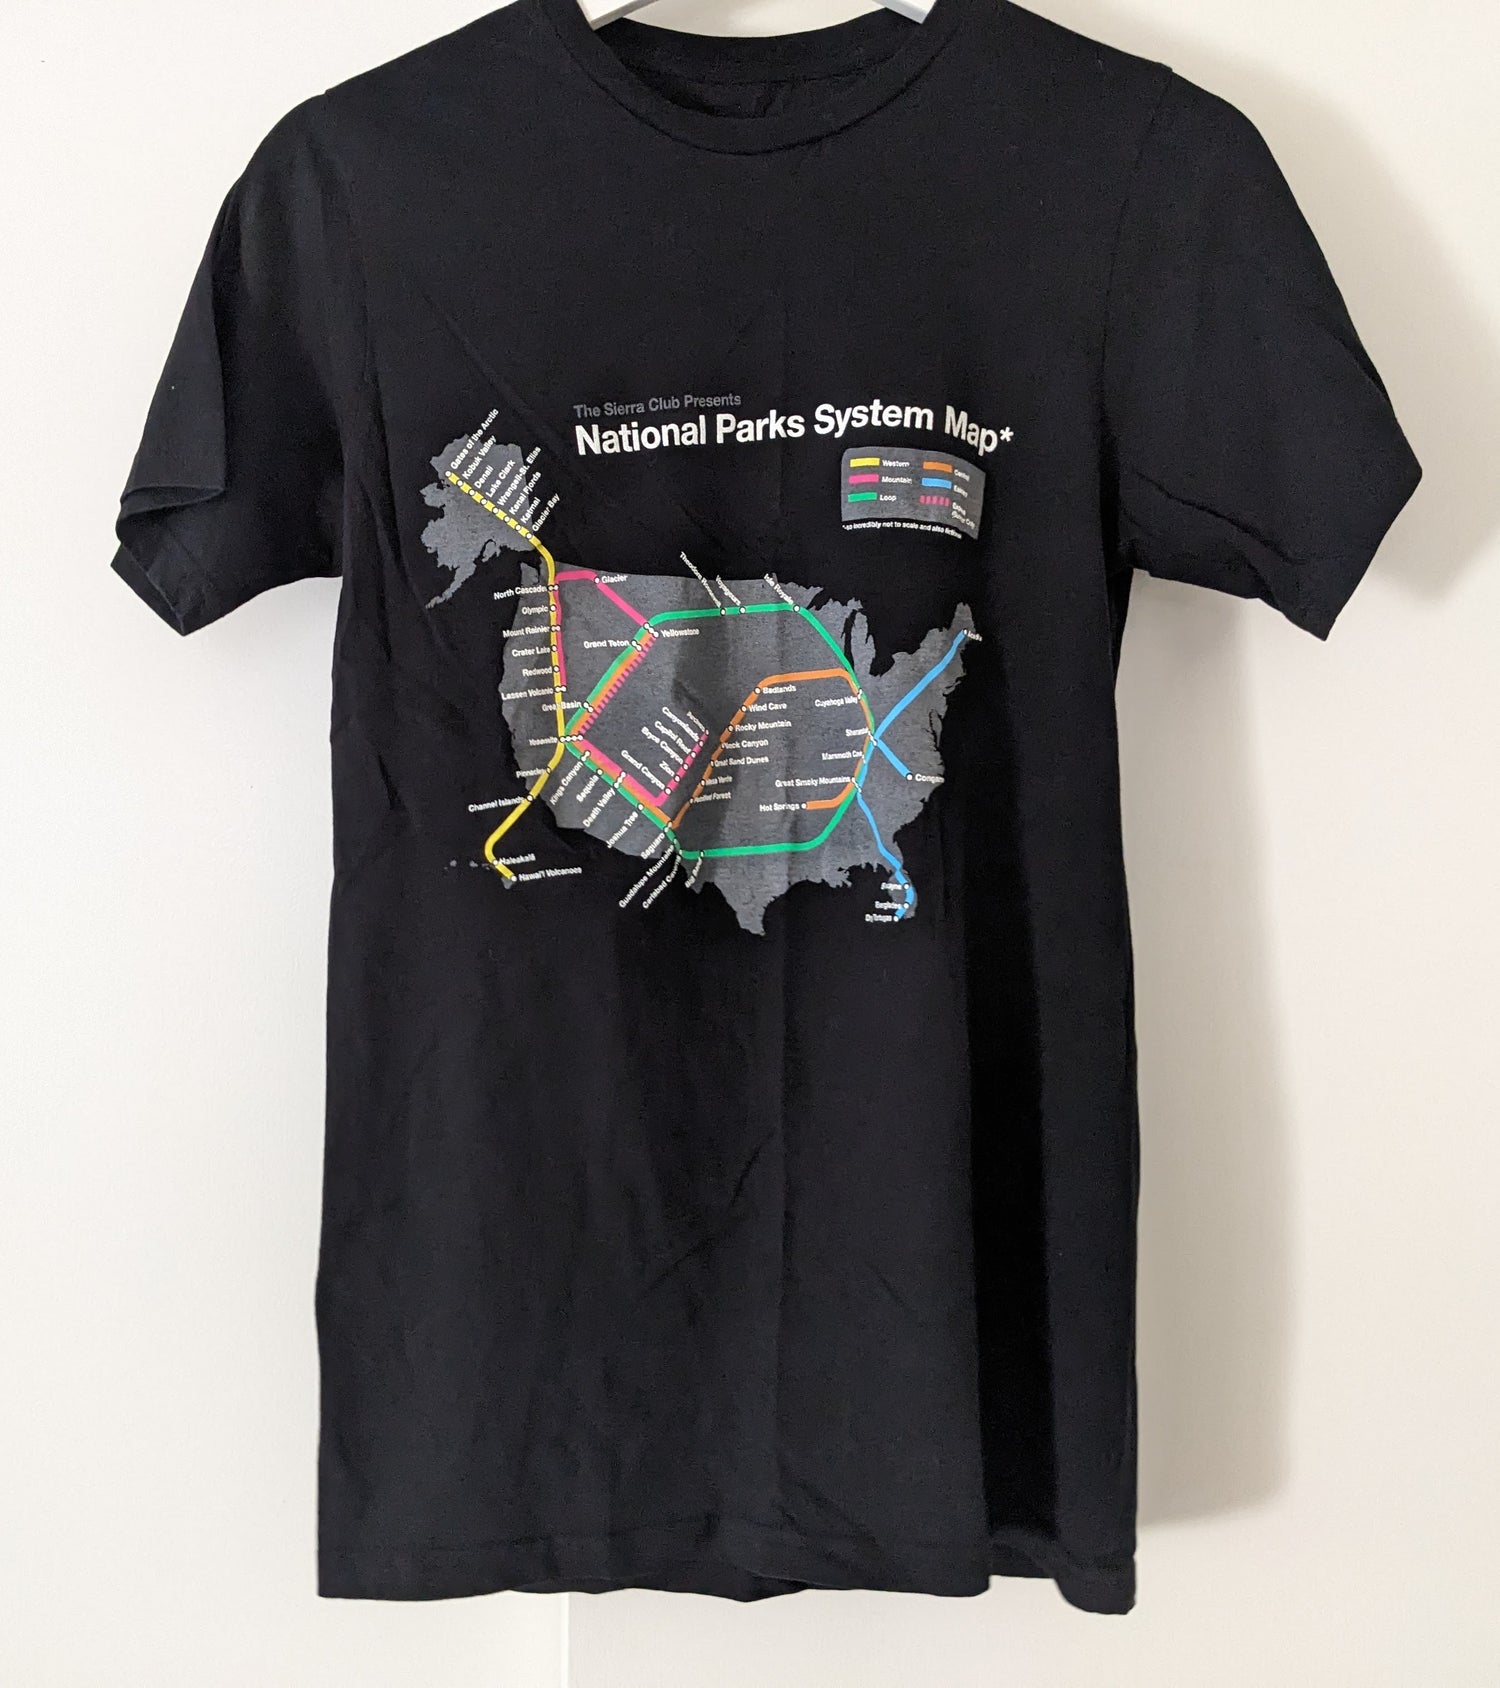 Sierra Club National Park System Map black shirt